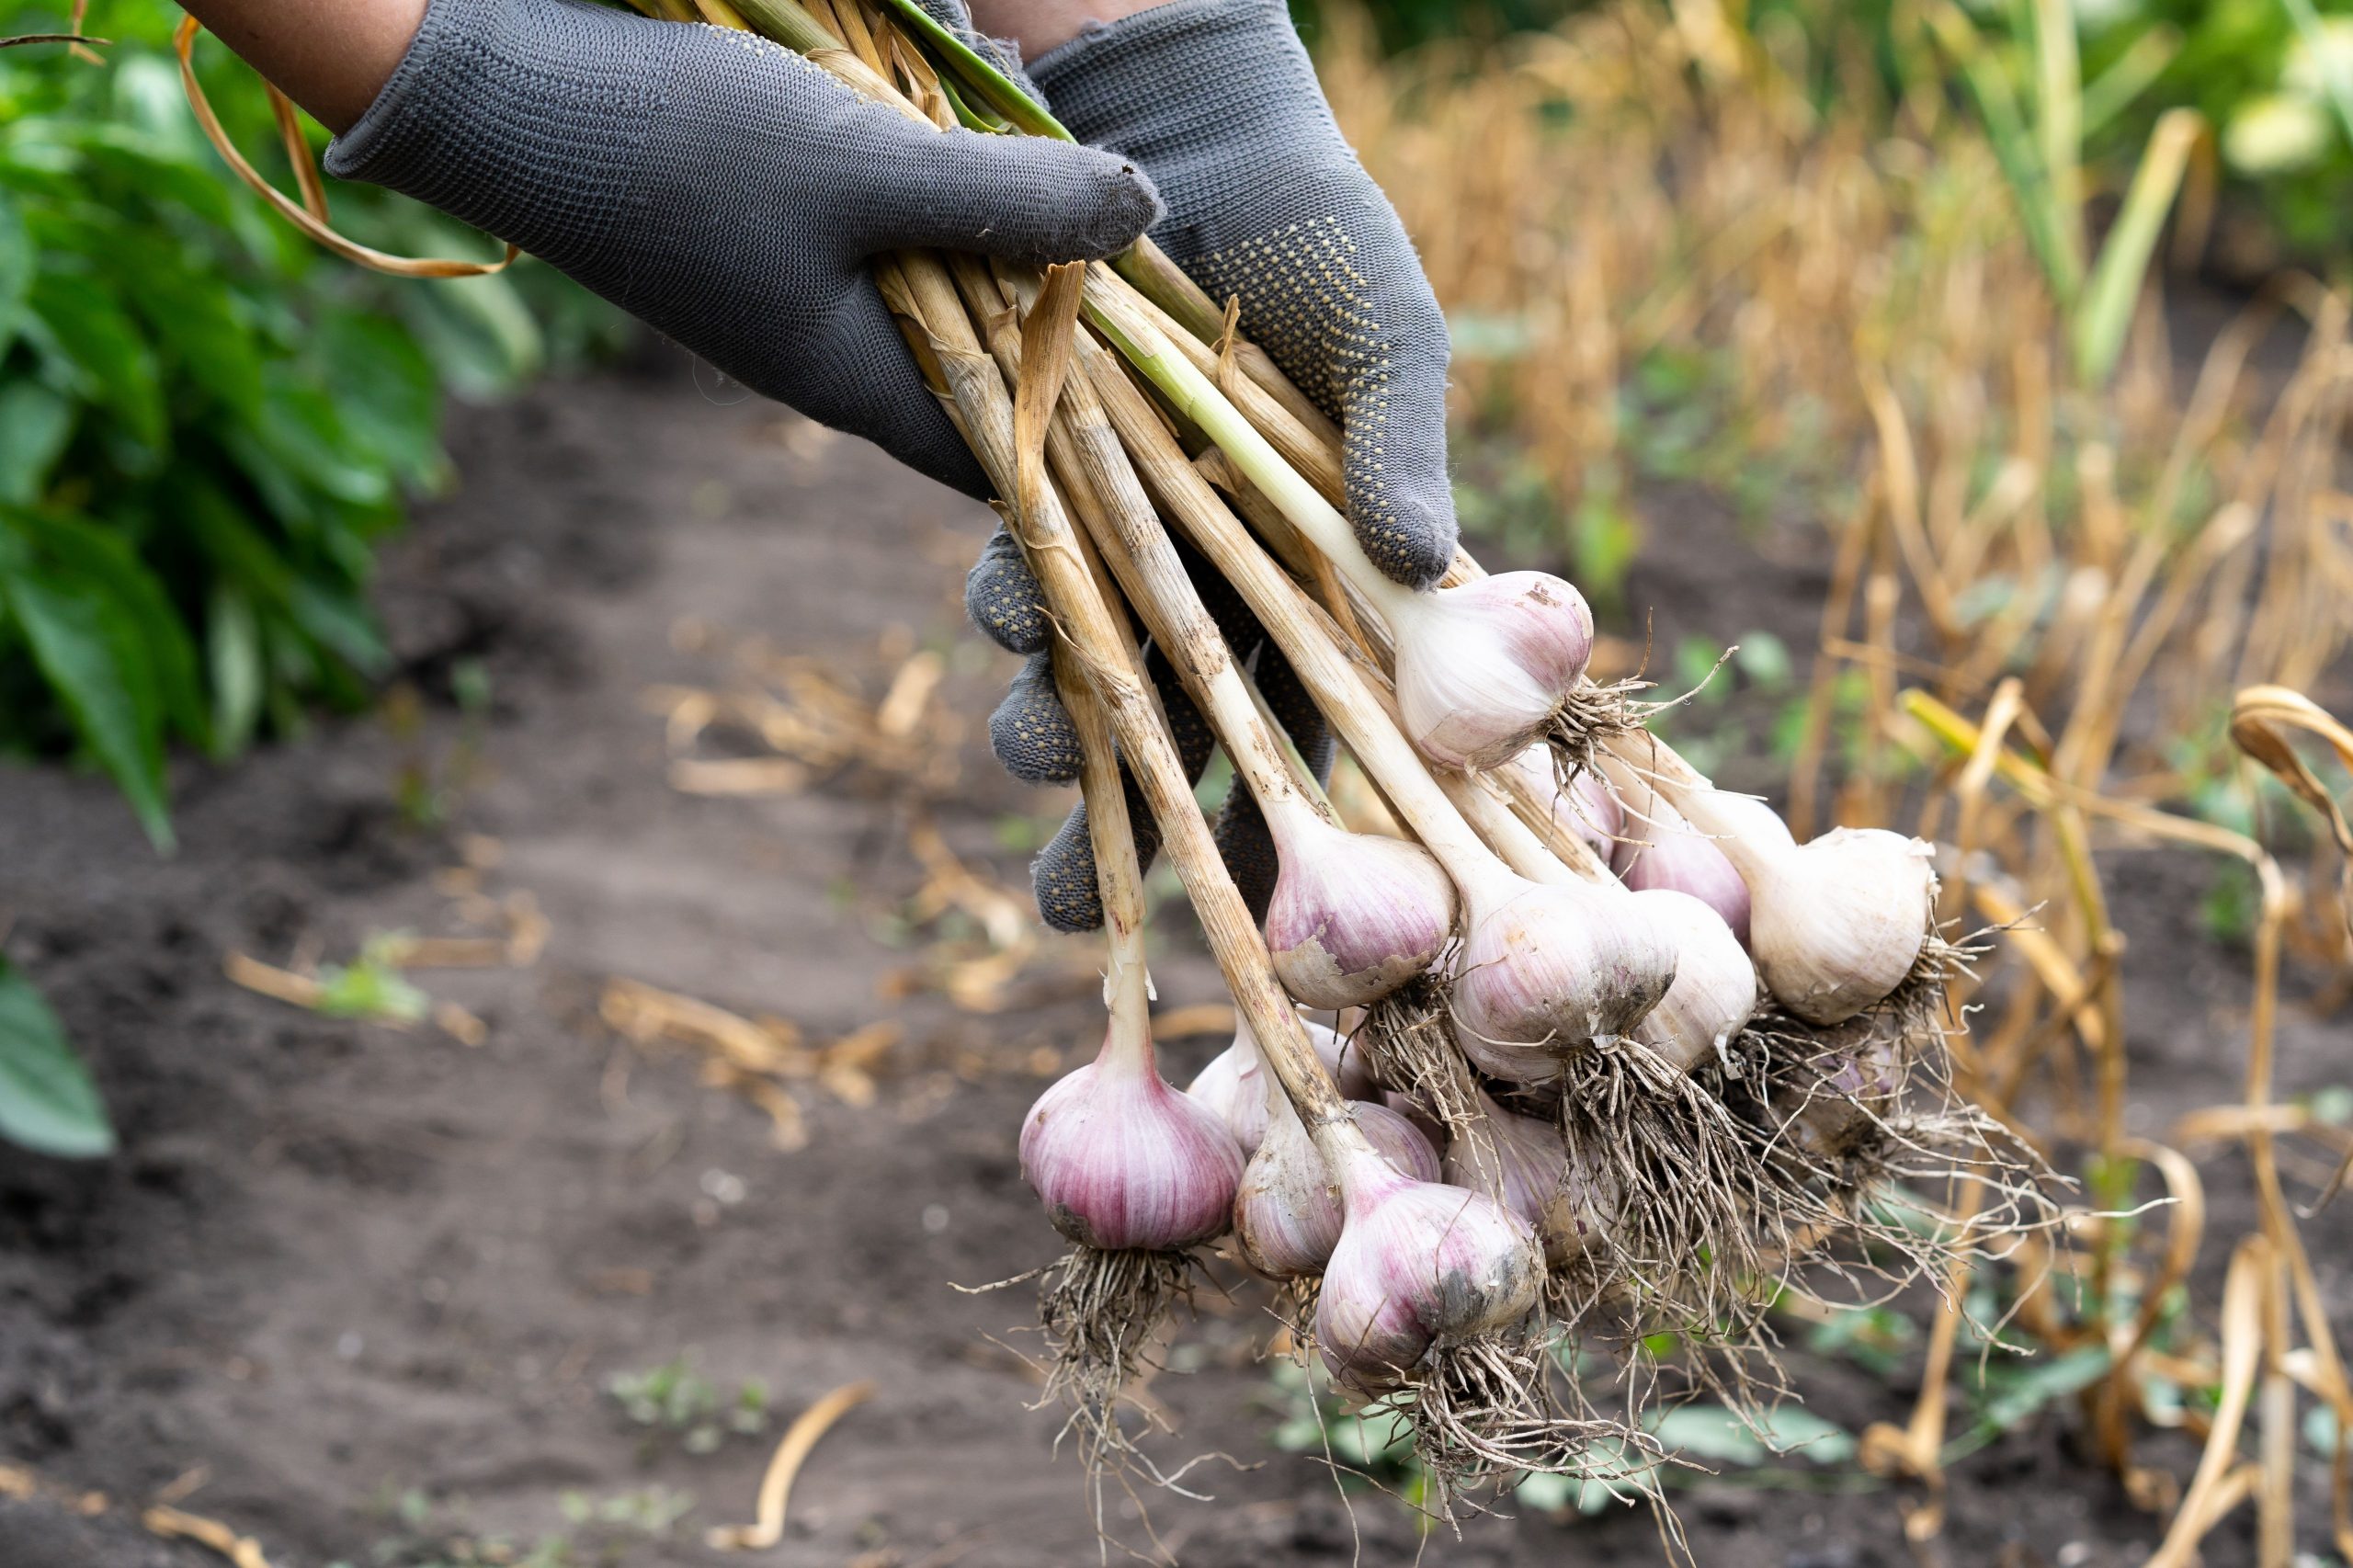 Harvesting the garlic